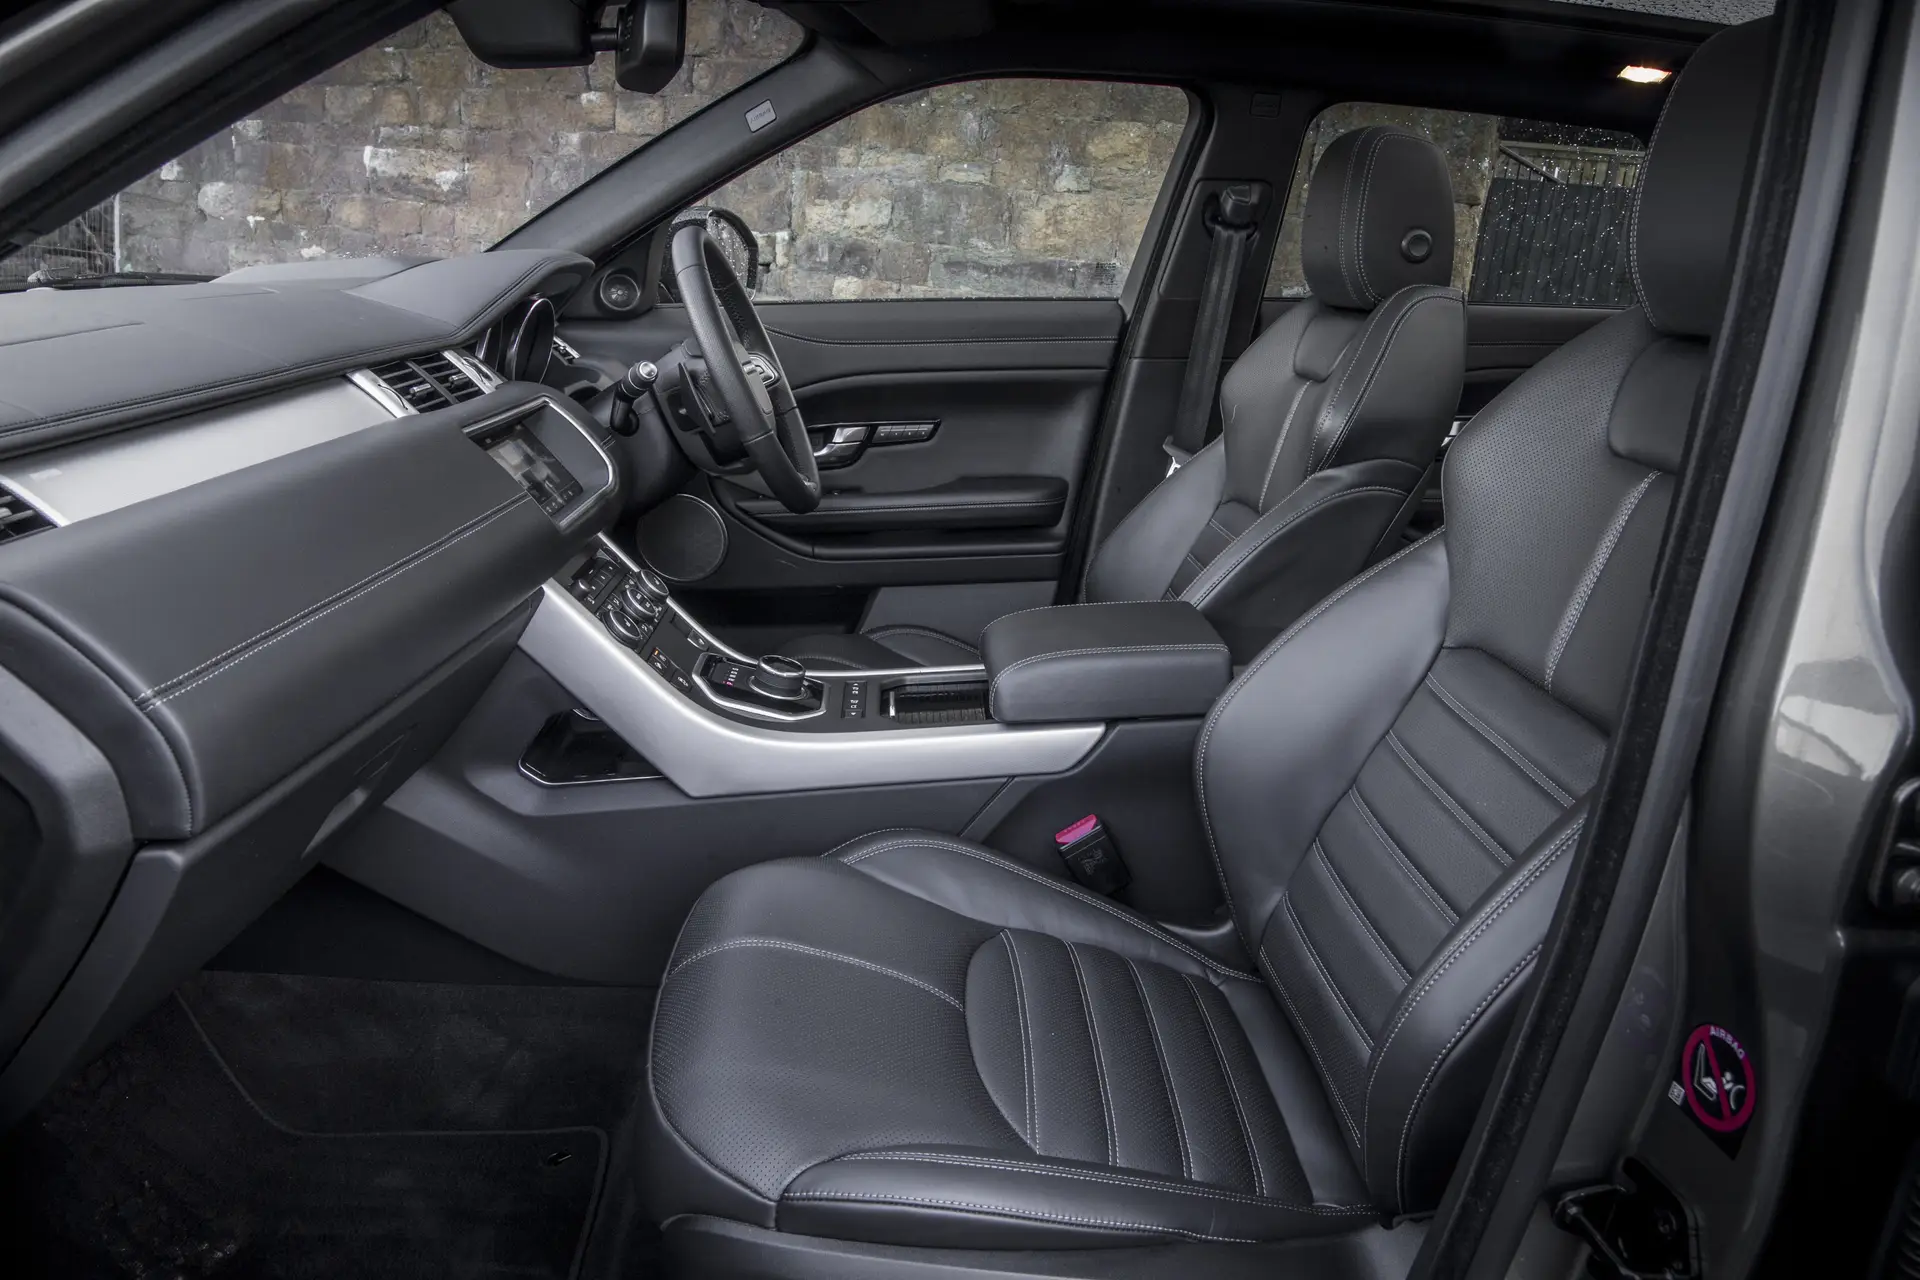 Range Rover Evoque (2011-2019) Review: interior close up photo of the Range Rover Evoque front seats